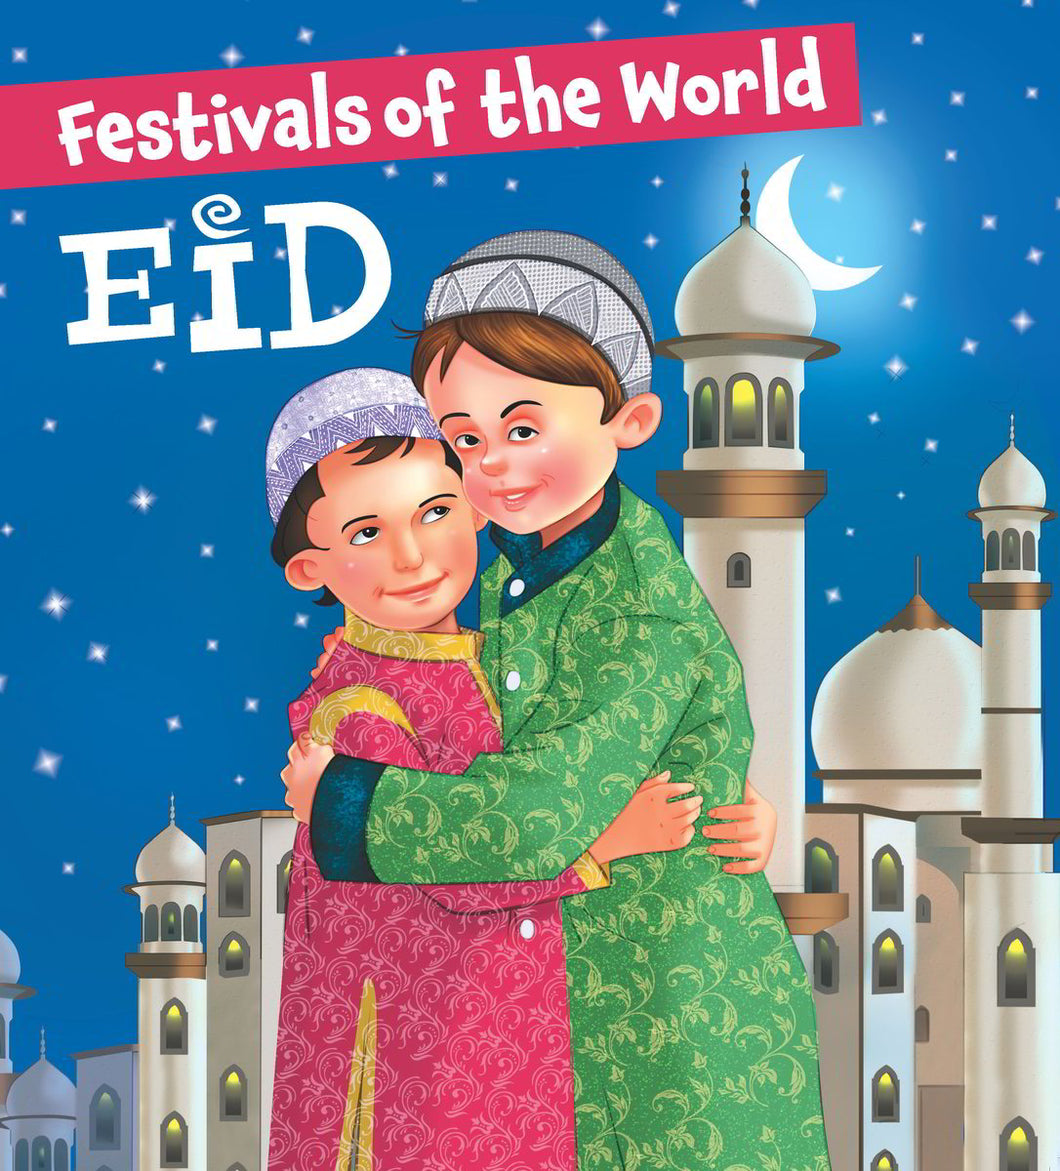 Festivals of the World: Eid